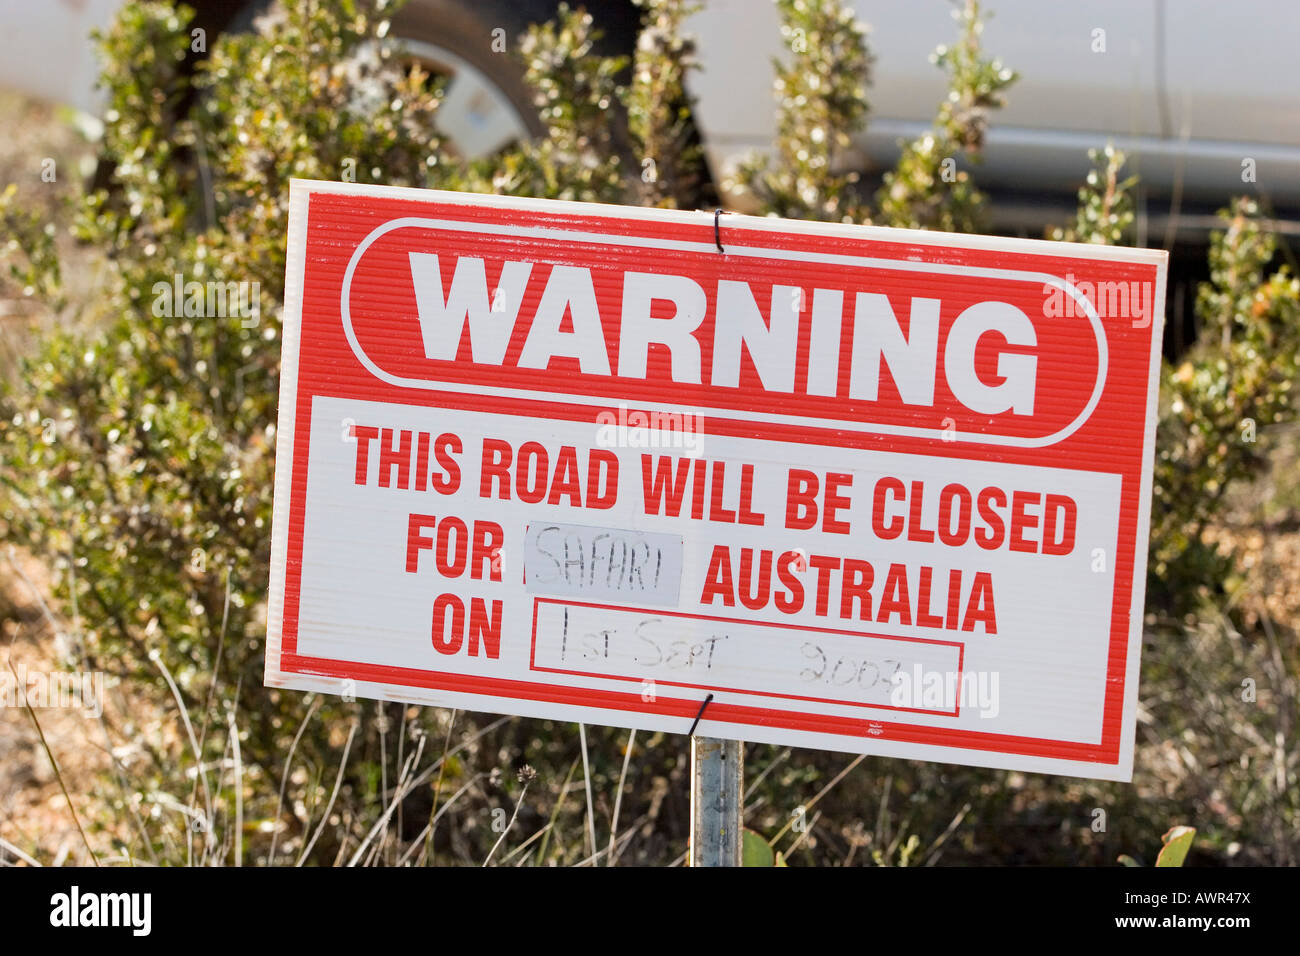 Warning sign (this road will be closed for safari Australia), Western Australia, WA, Australia Stock Photo